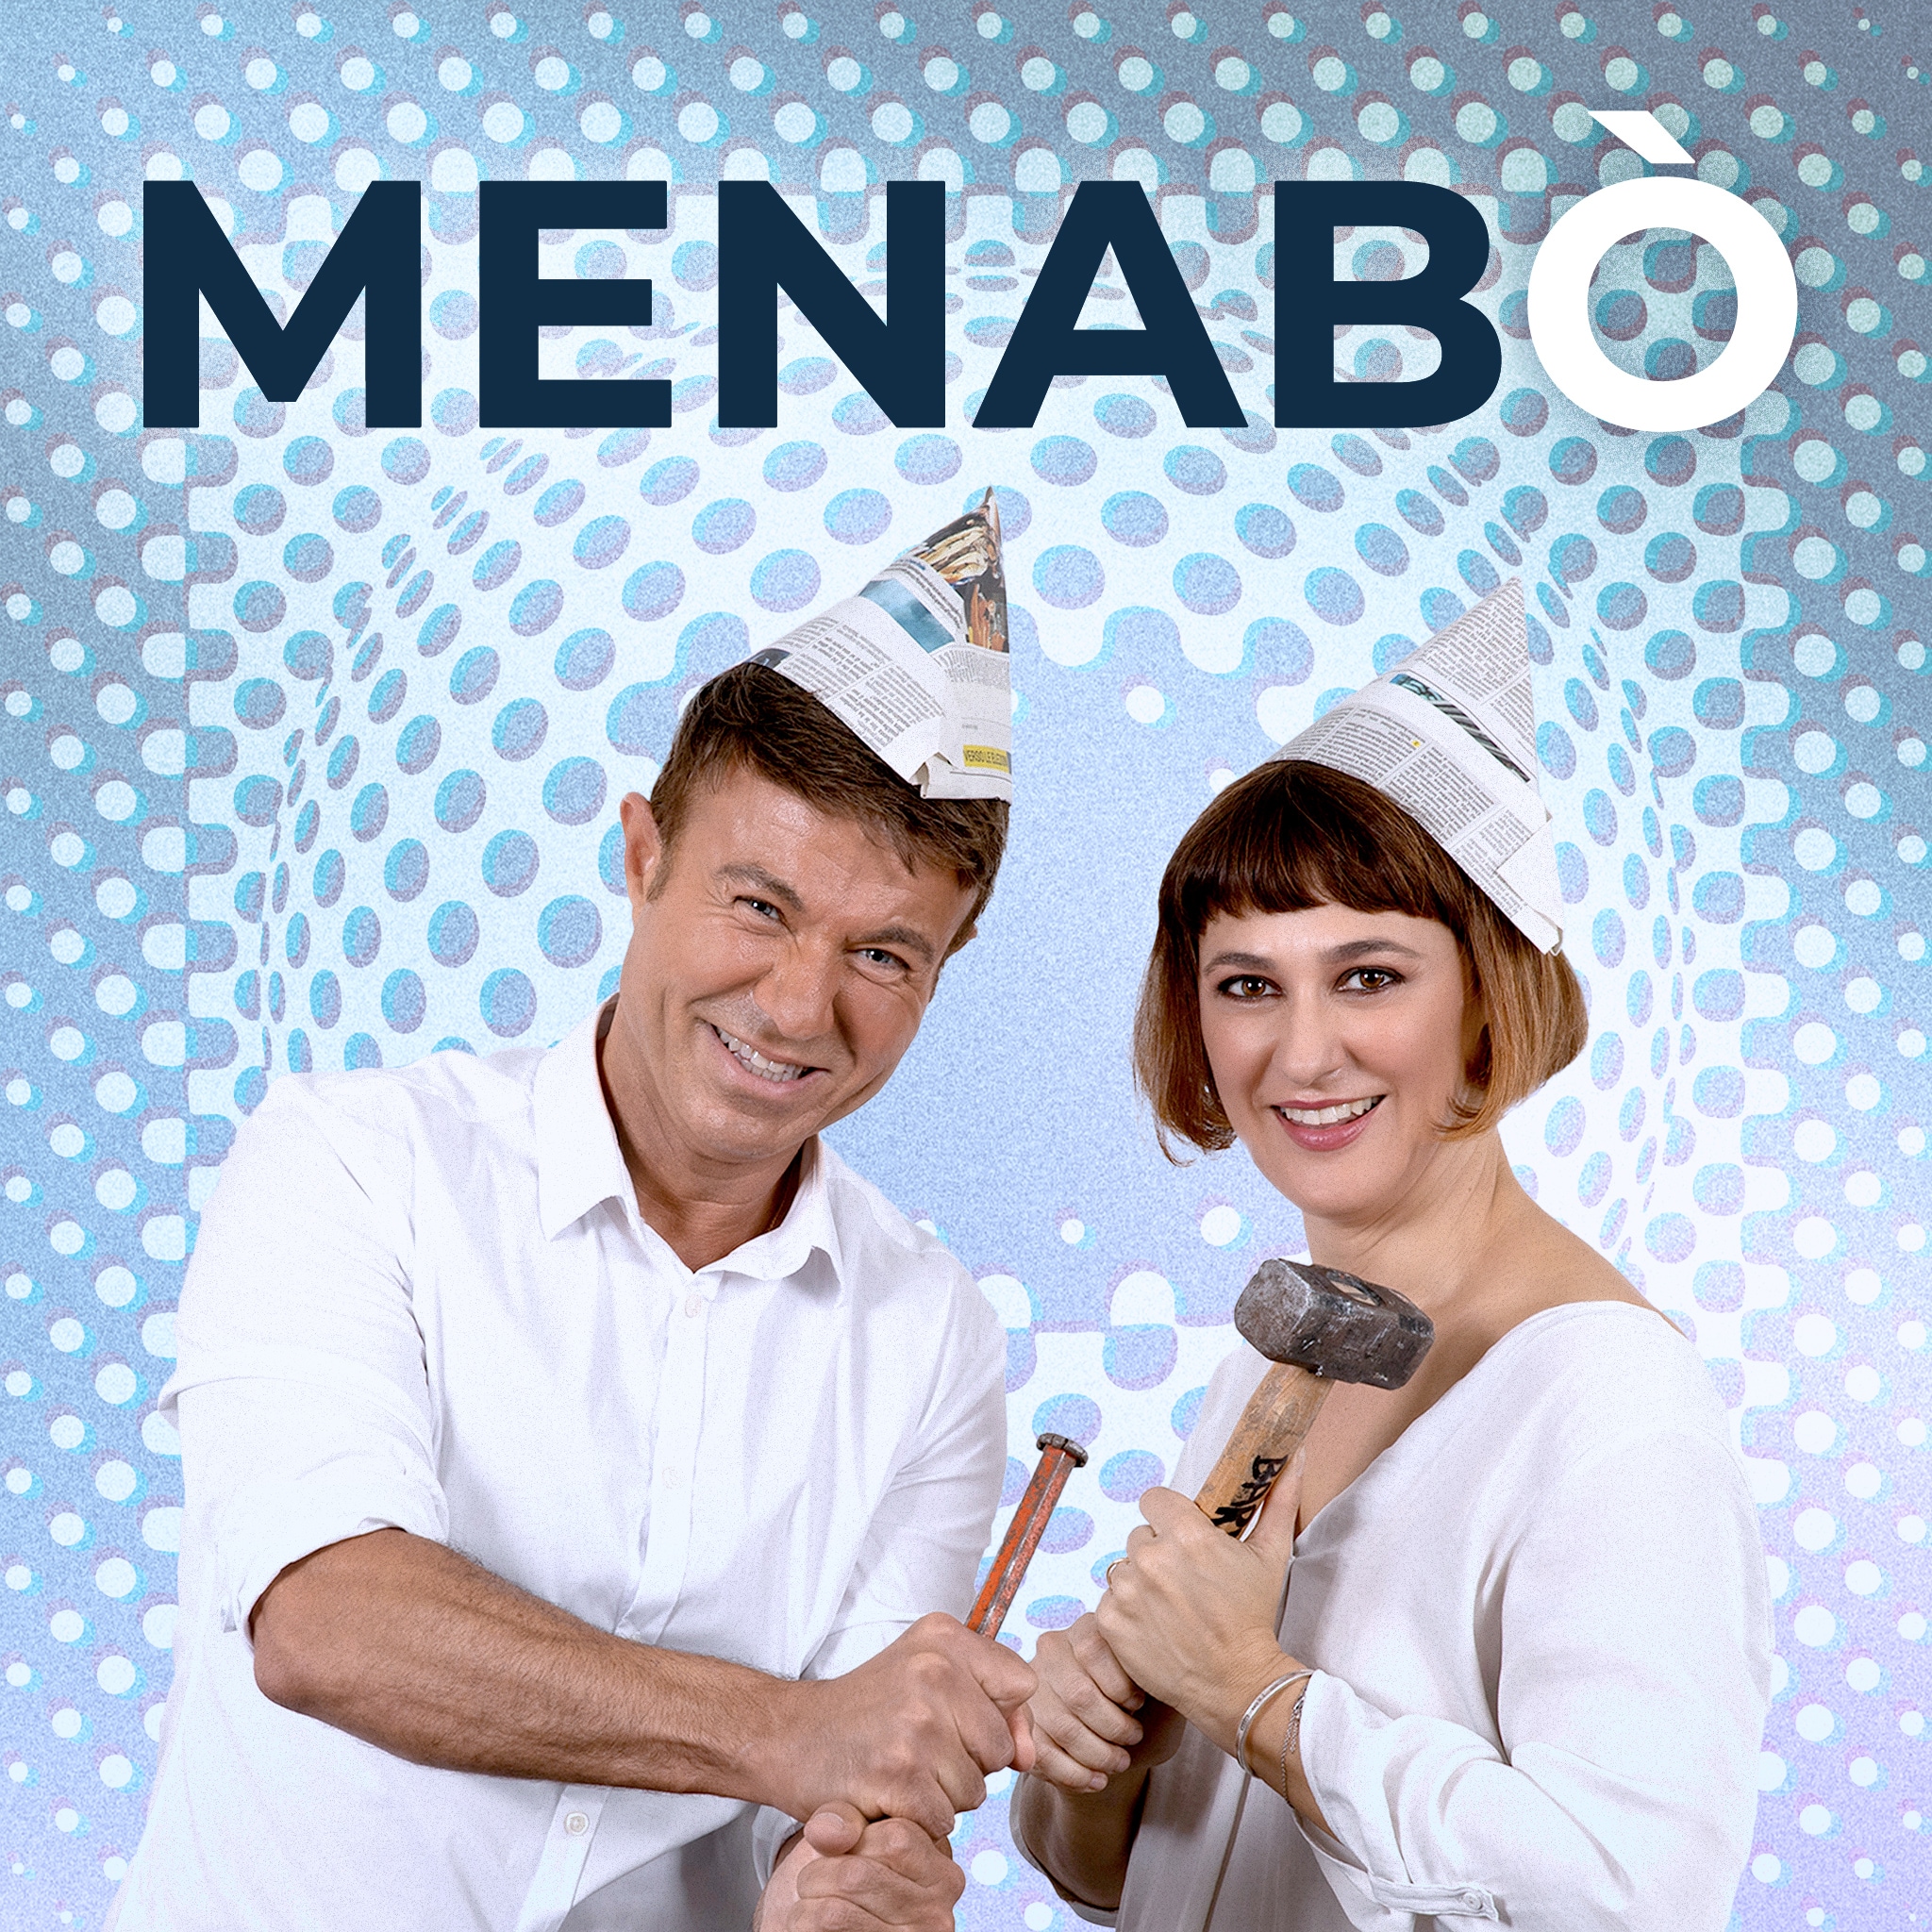 Rai Radio 1 MenabÒ